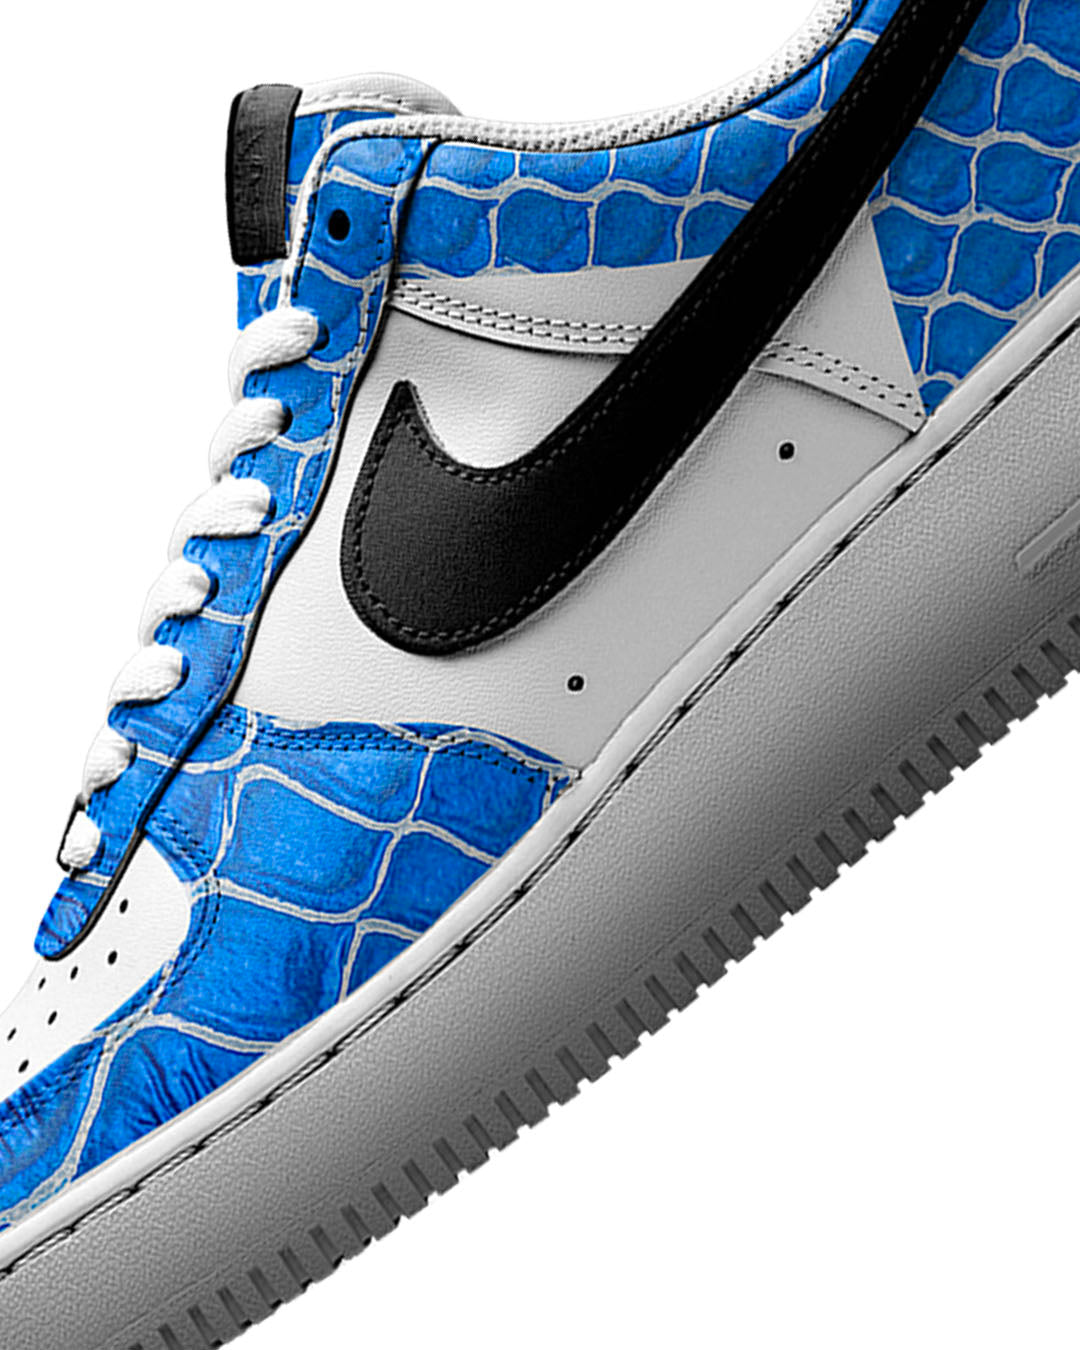 Nike Air Force 1 'Blue Snake'